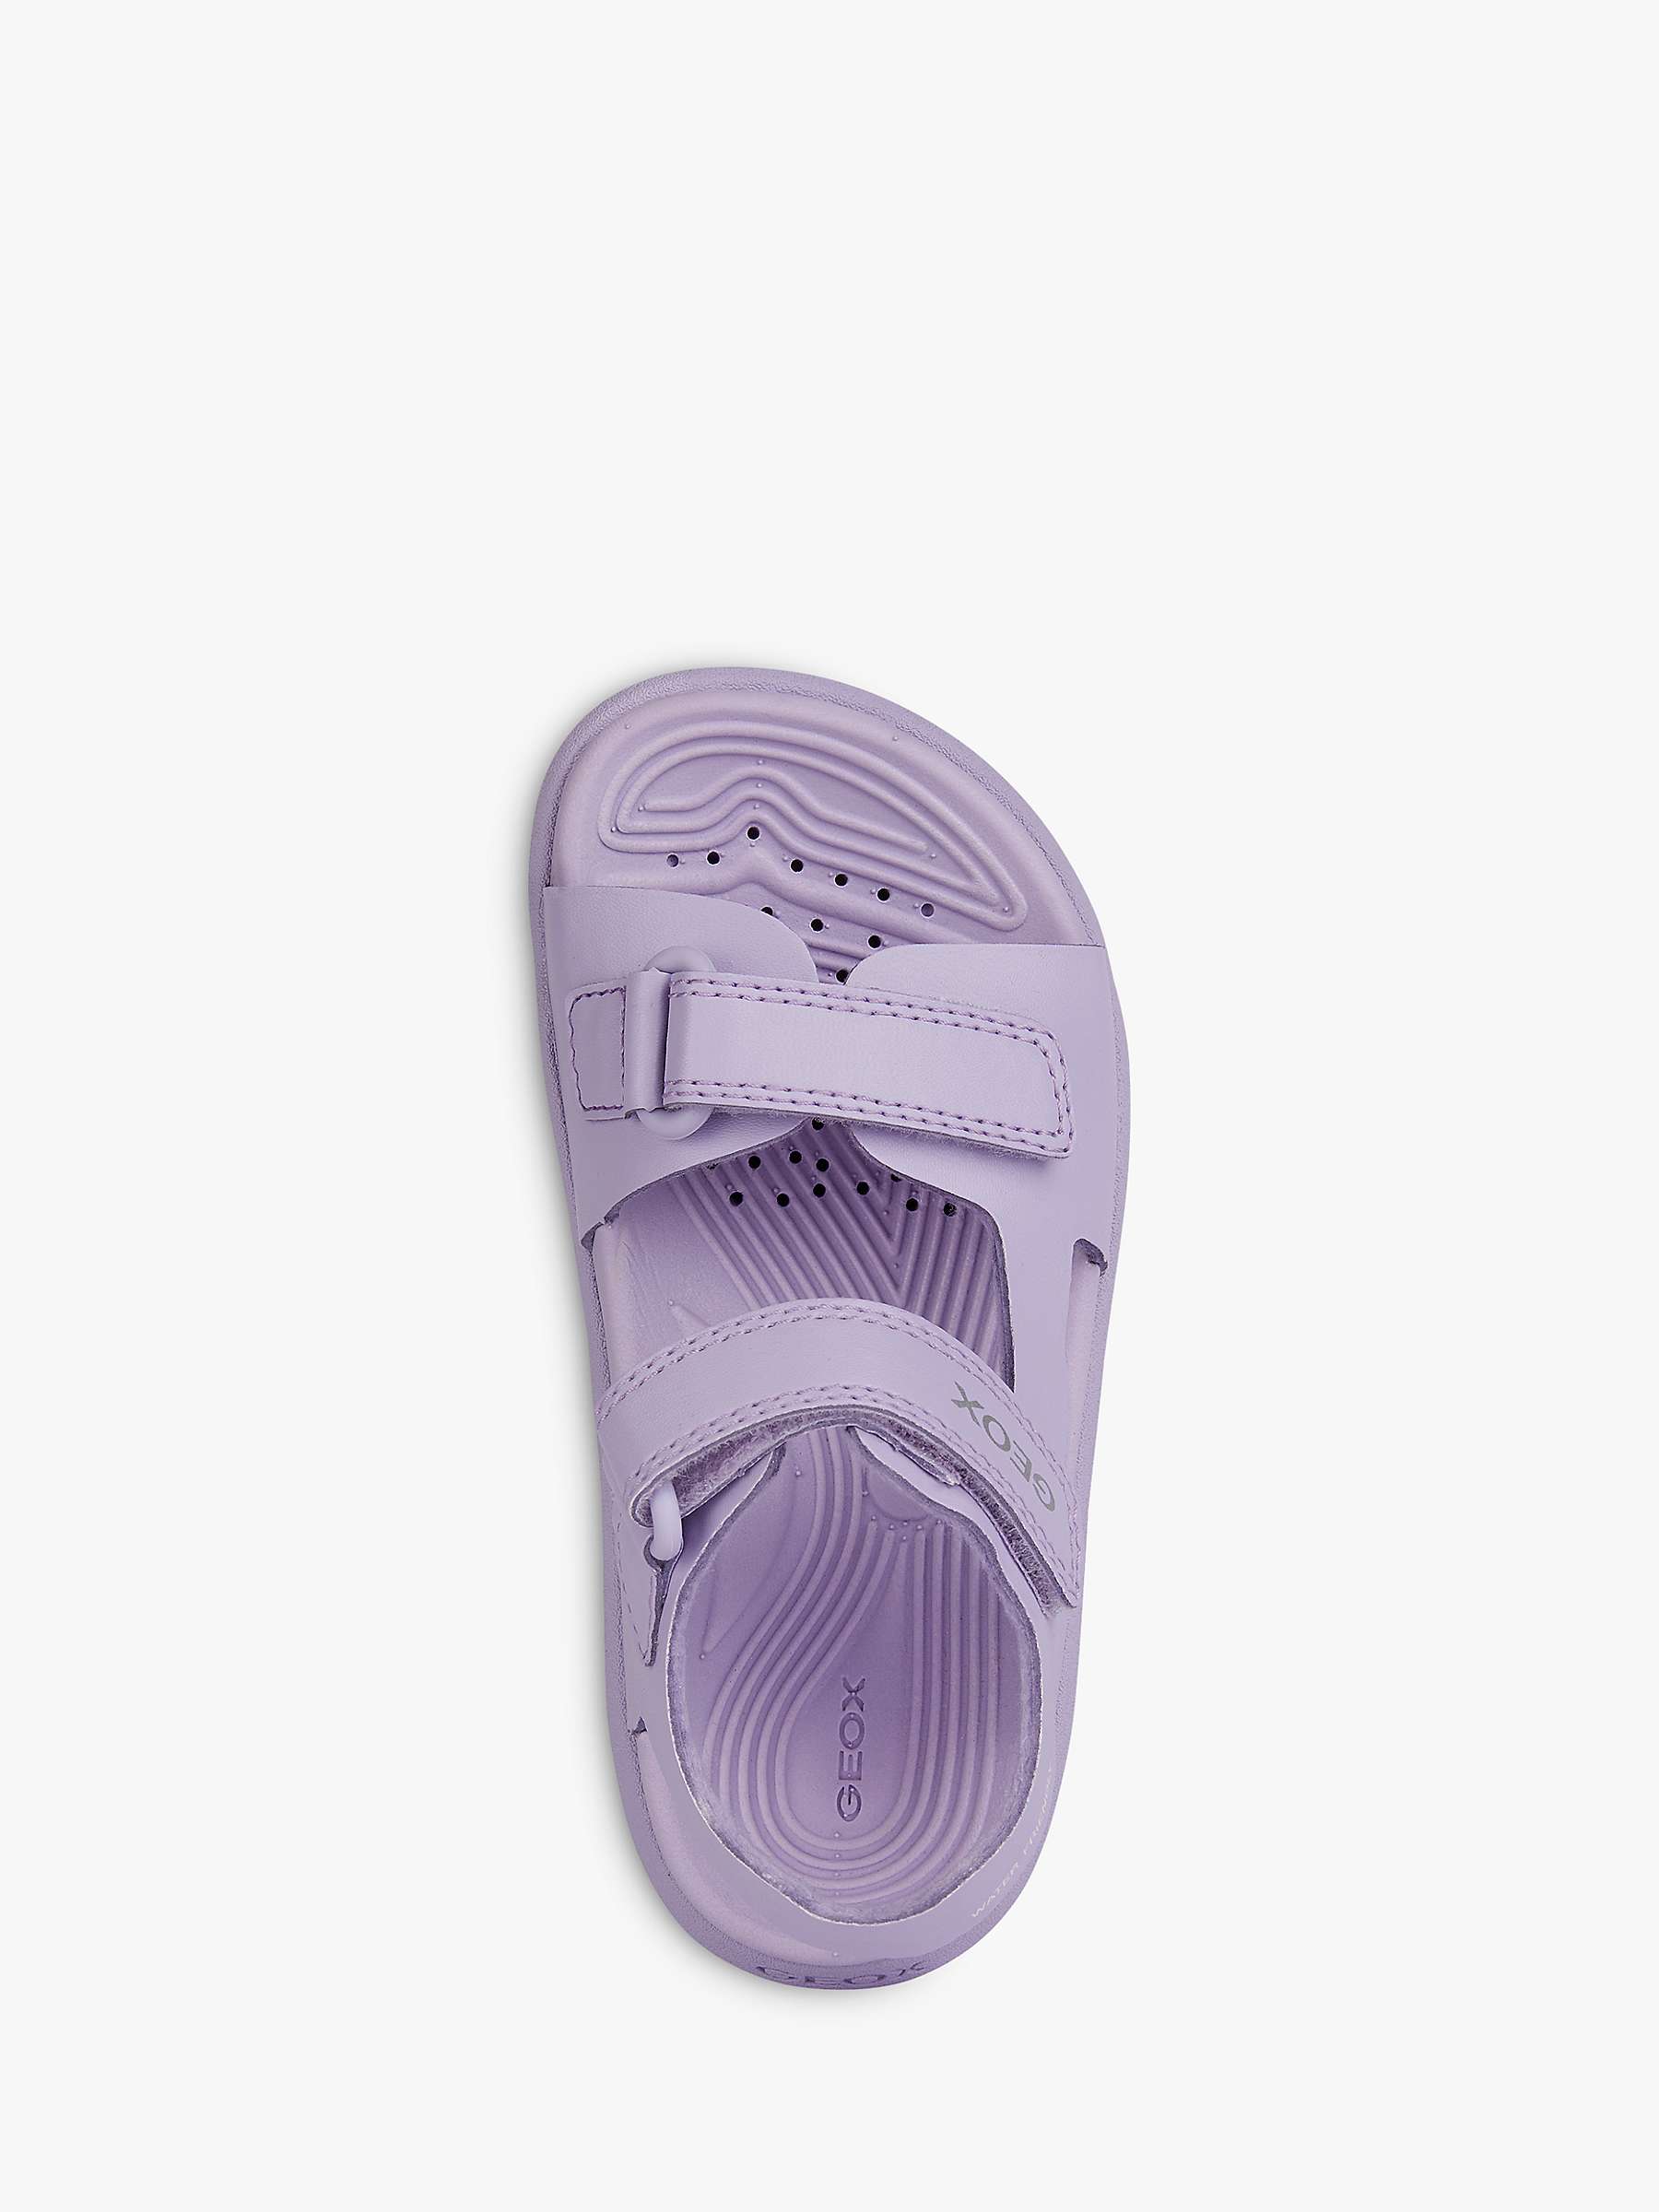 Buy Geox Kids' Fusbetto Water Resistant Sandals Online at johnlewis.com